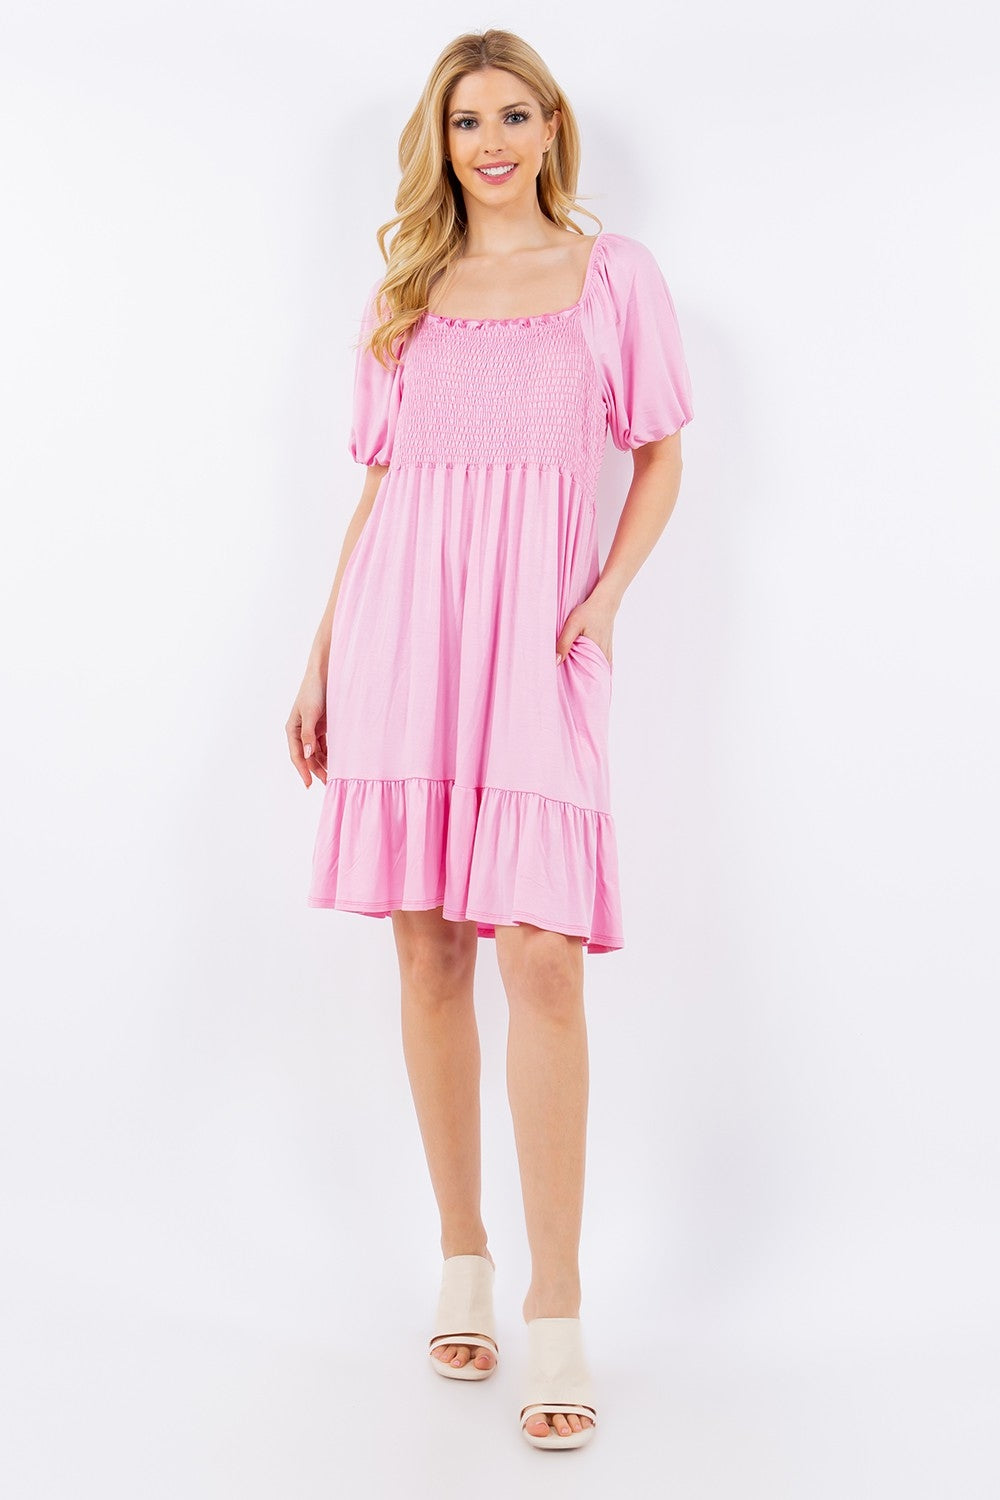 Simple Sweet Smocked Dress *3 colors*